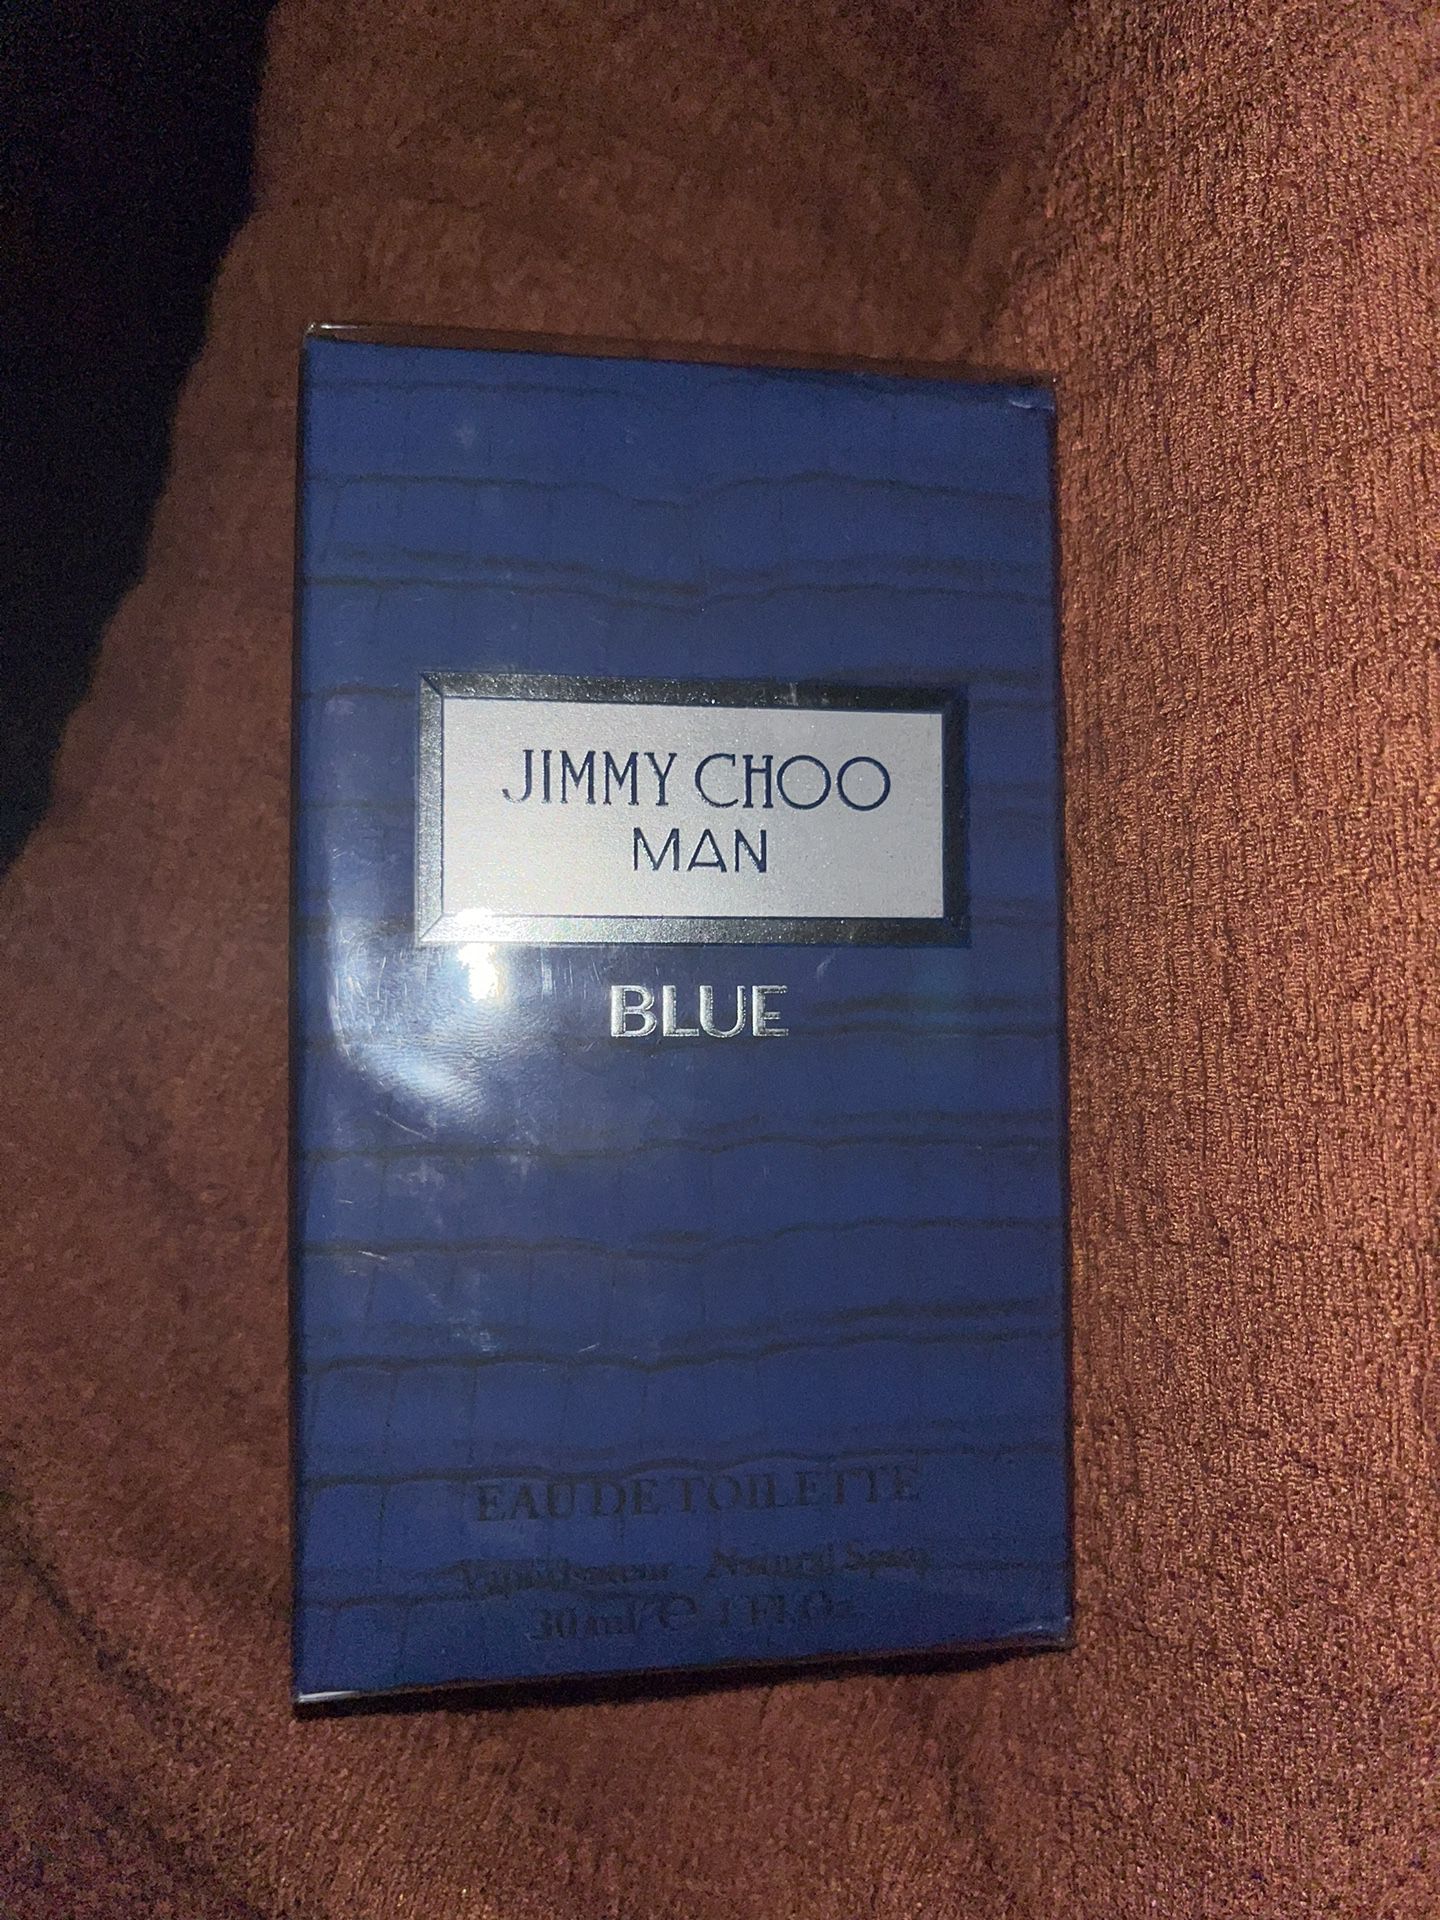 Jimmy Choo Blue